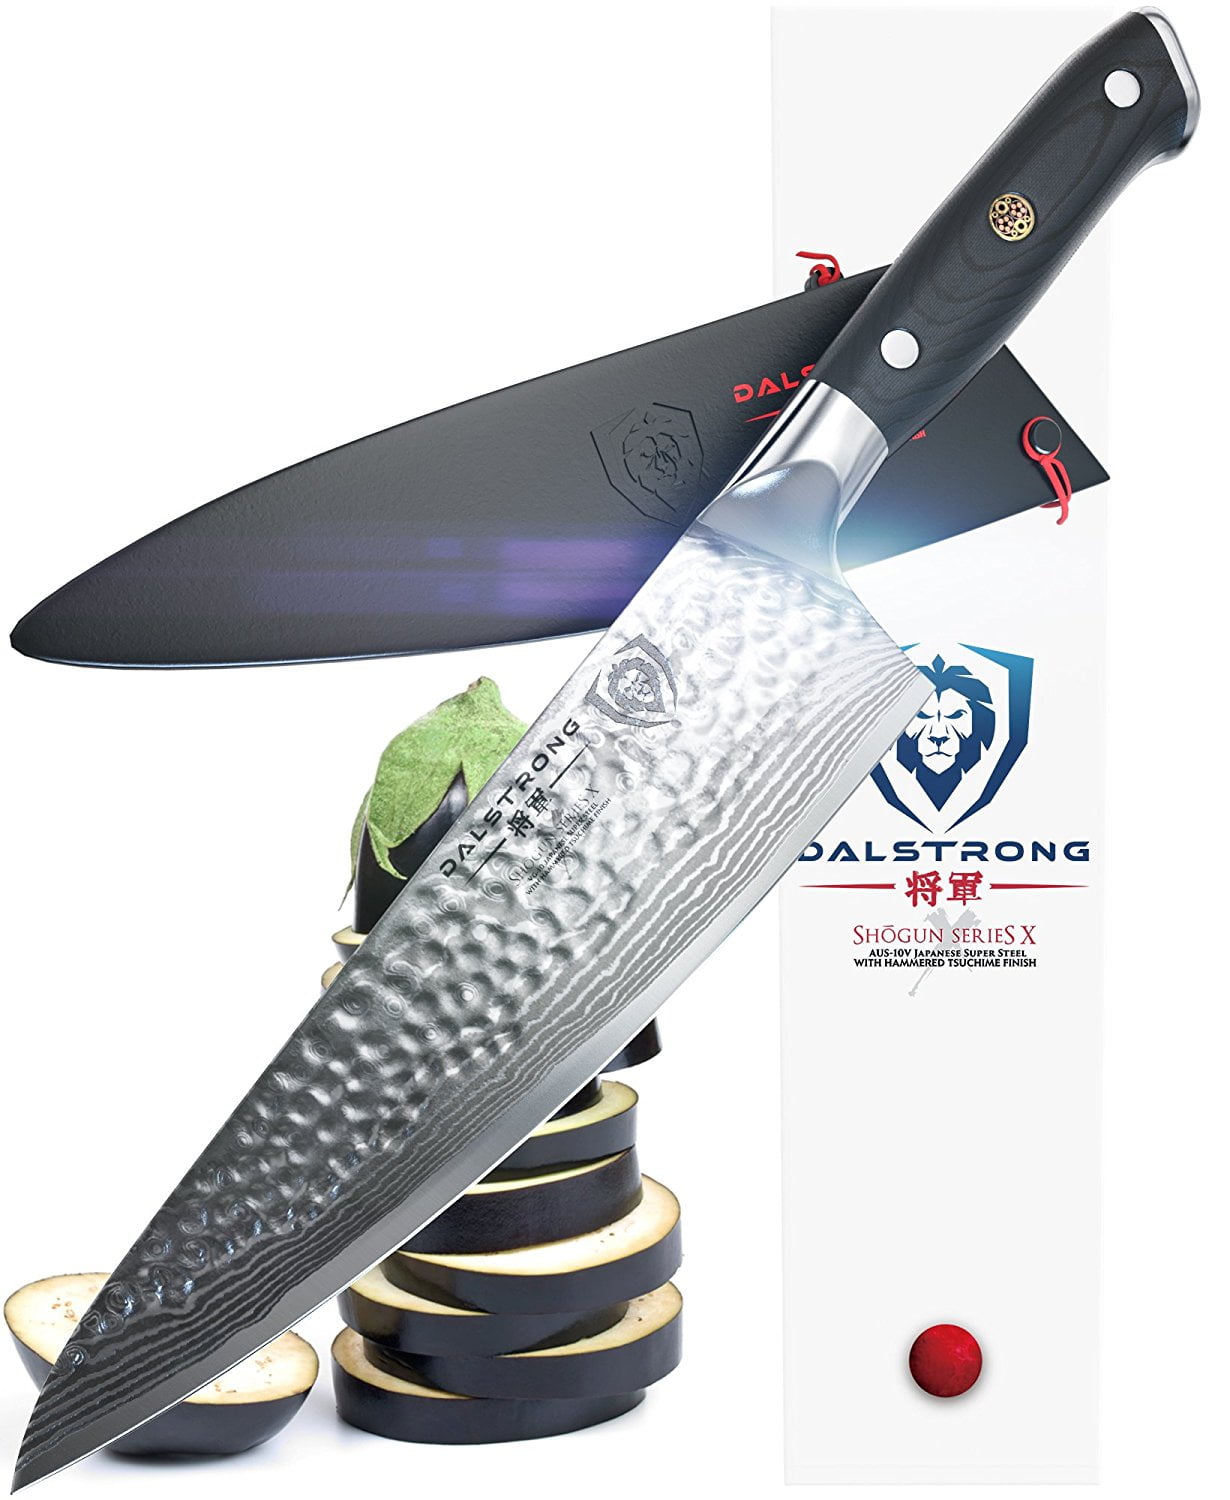 Dalstrong Slicing Carving Knife - 12 Granton Edge - Shogun Series - AUS-10V- Vacuum Treated - Sheath